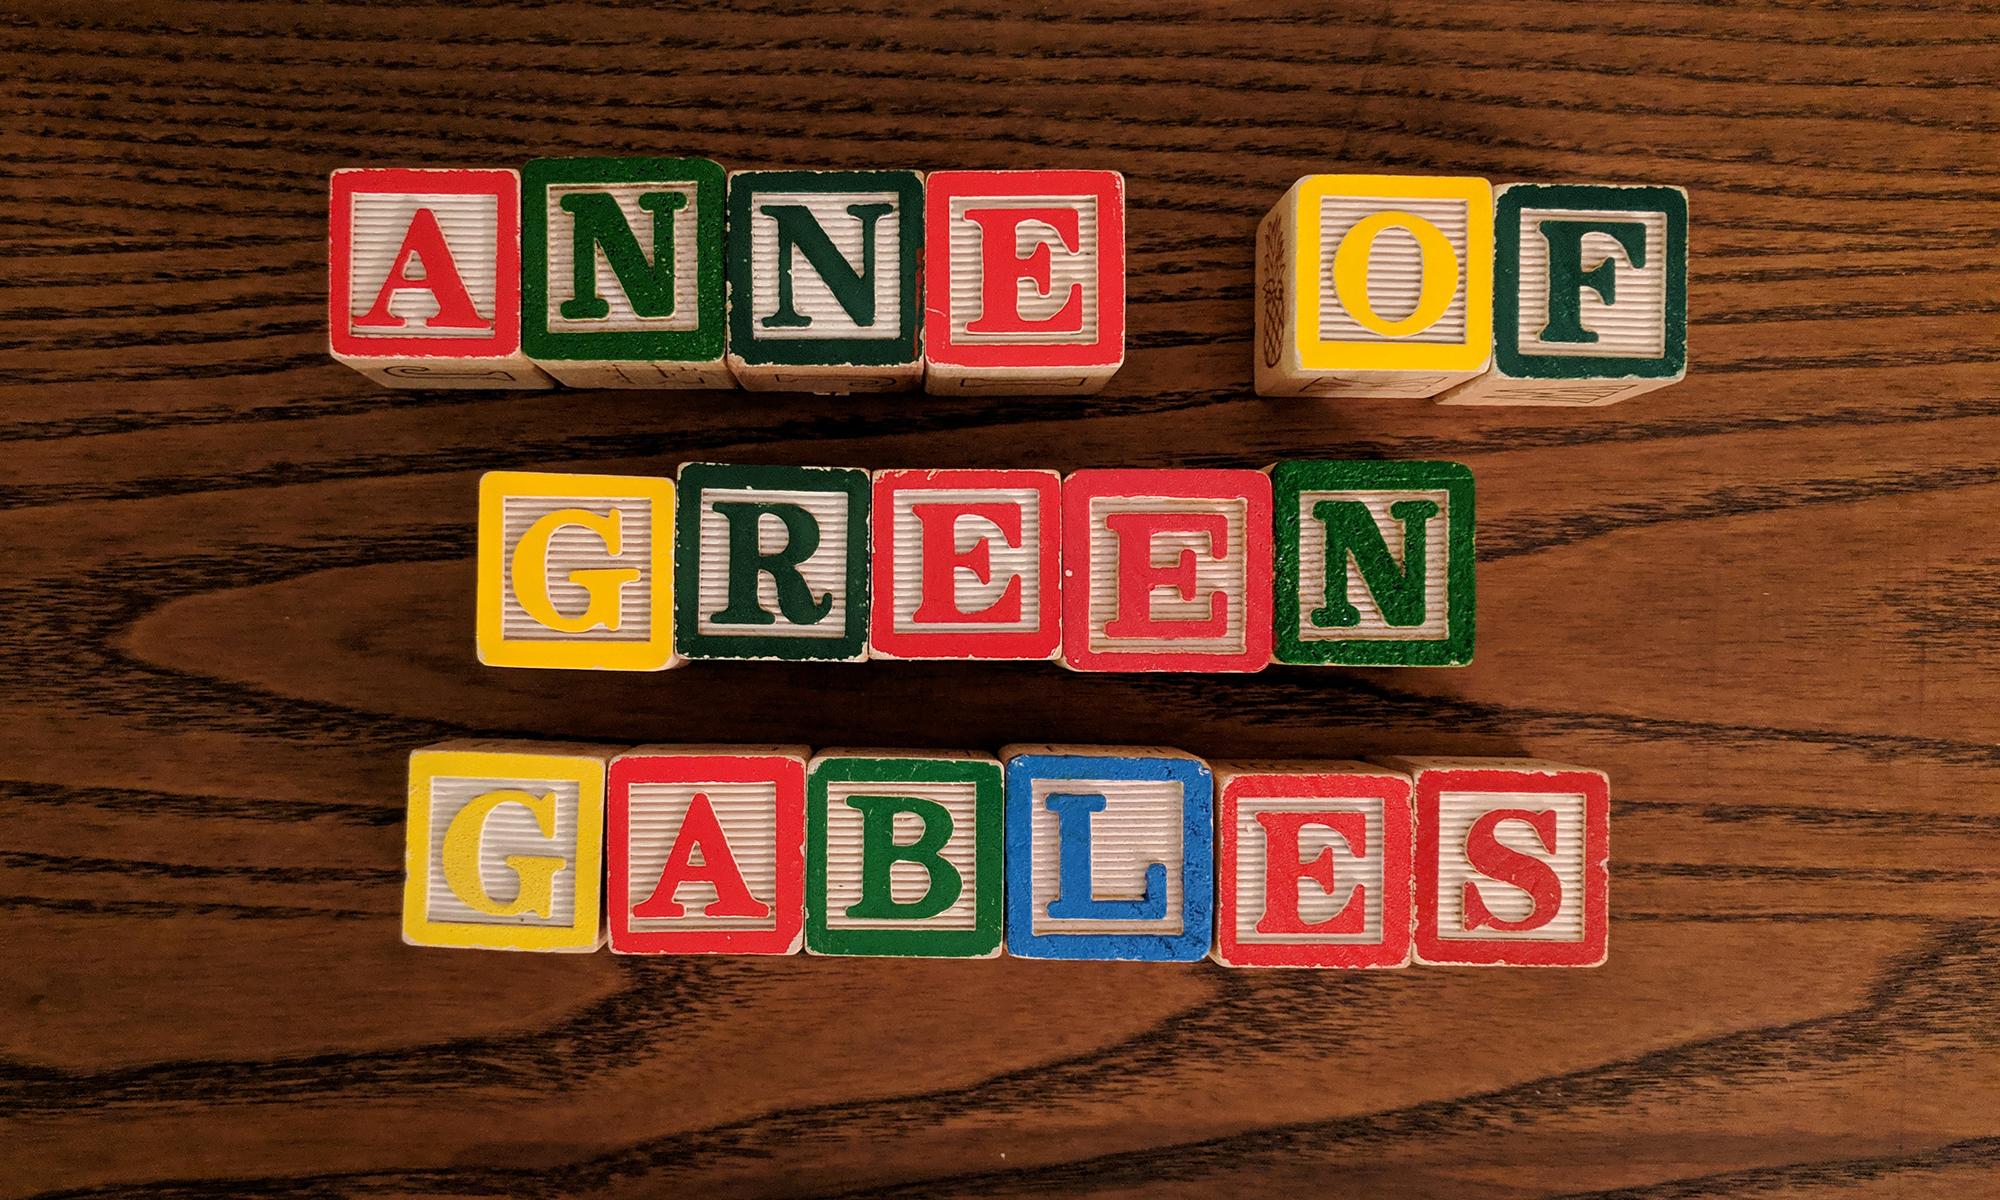 131 – “Bingen on the Rhine” in Anne of Green Gables